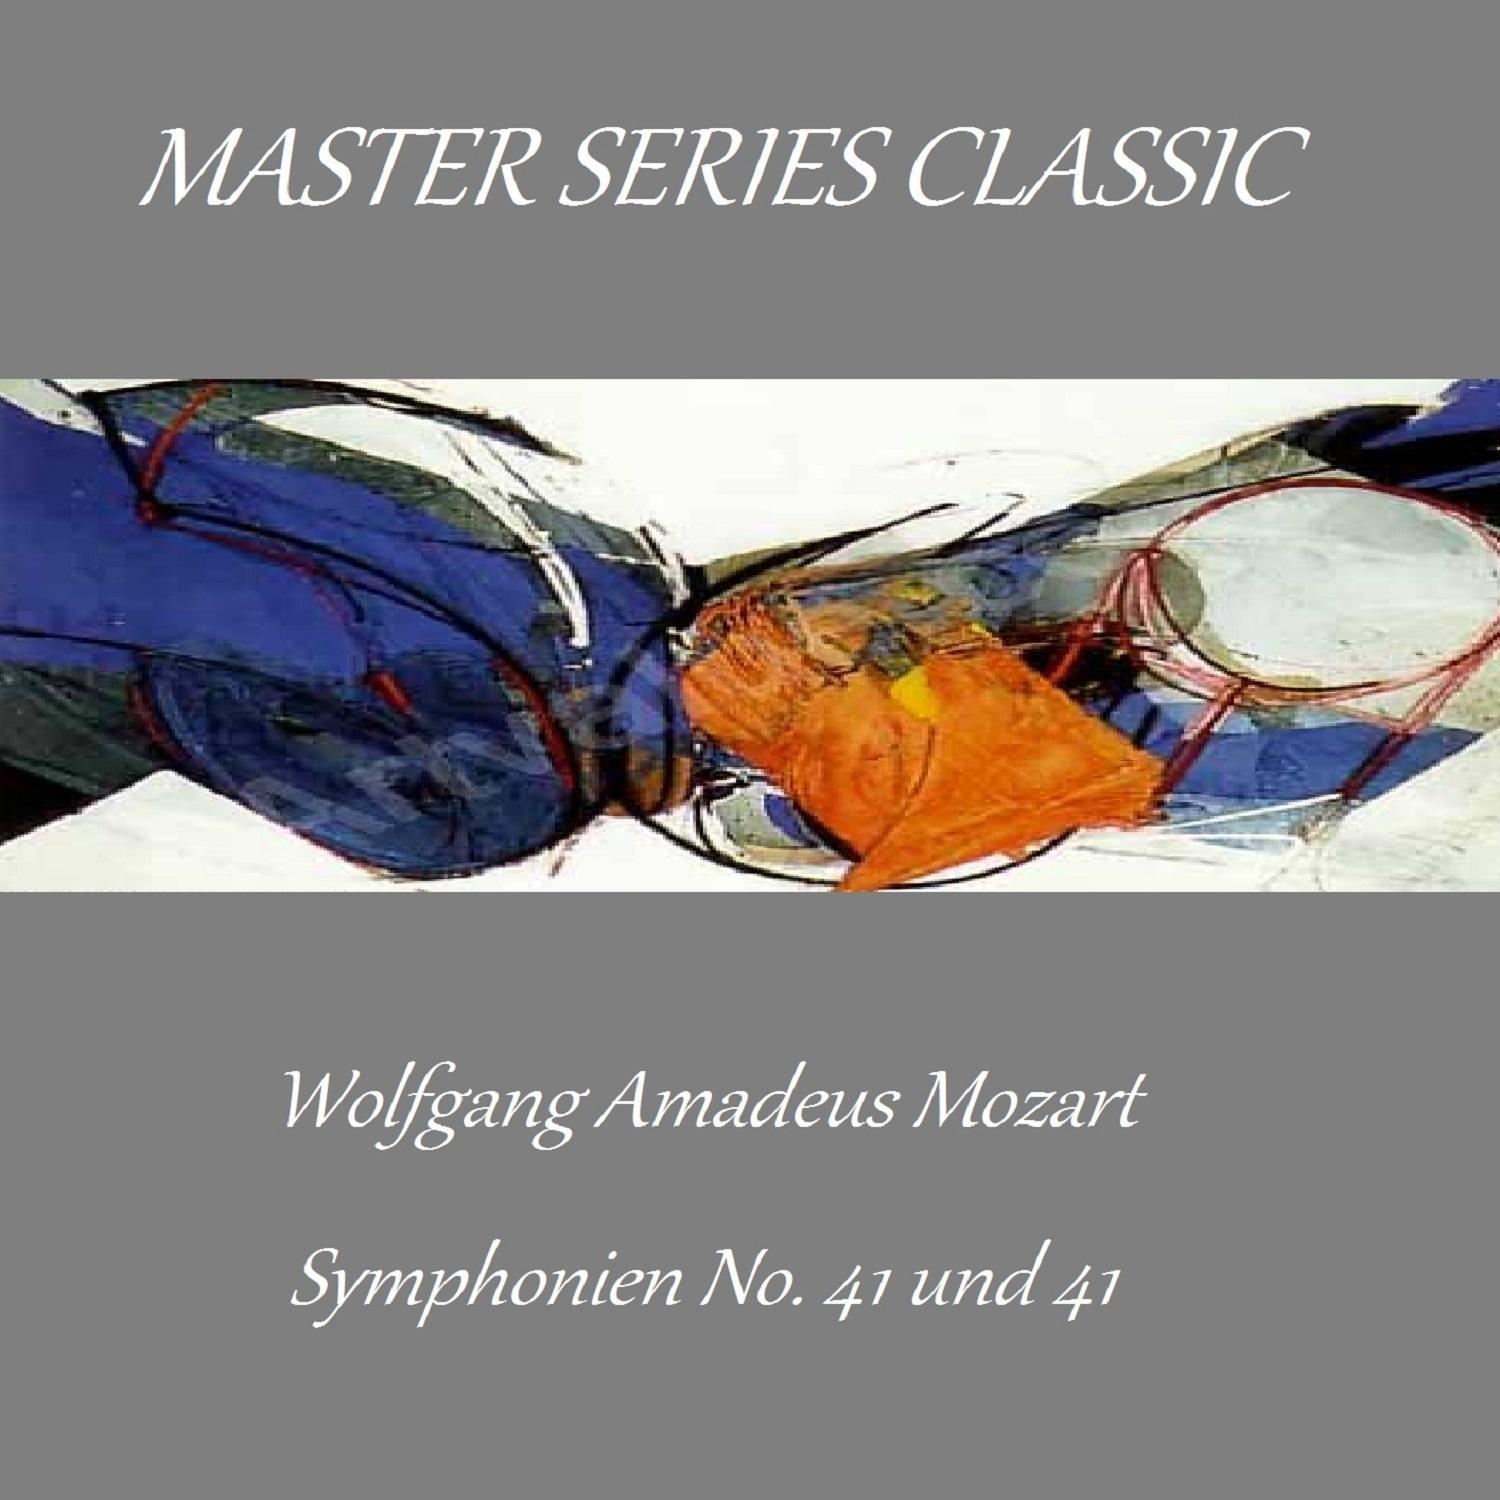 Master Series Classic - Symphonien No. 40 und 41